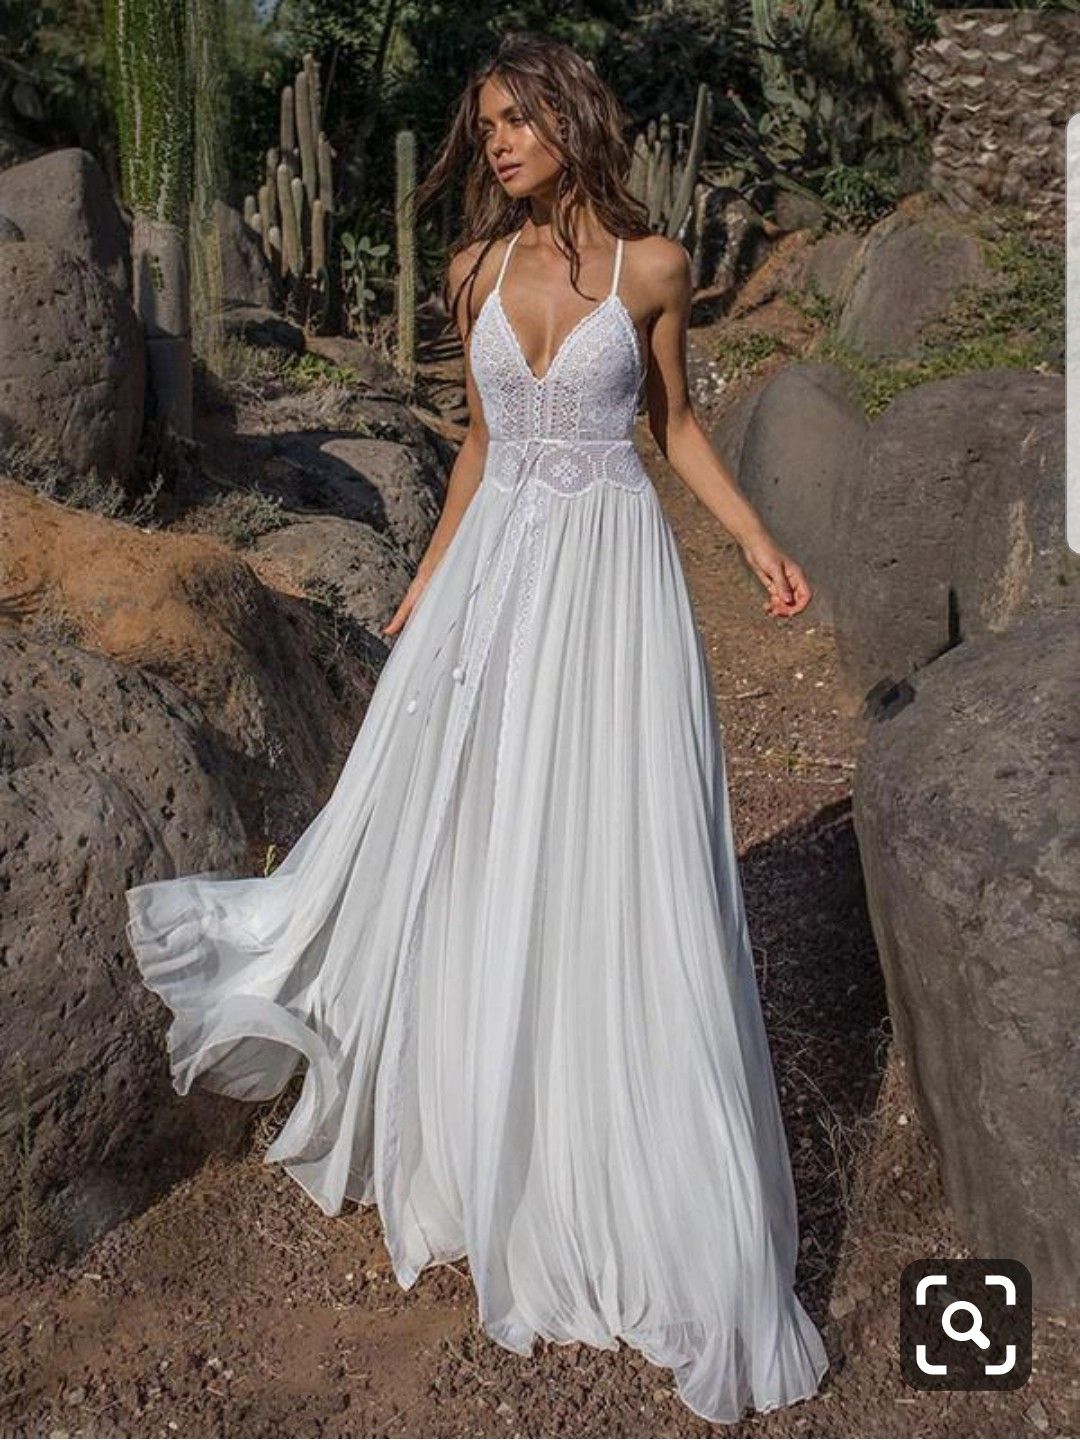 Boho style beach wedding dress with cover